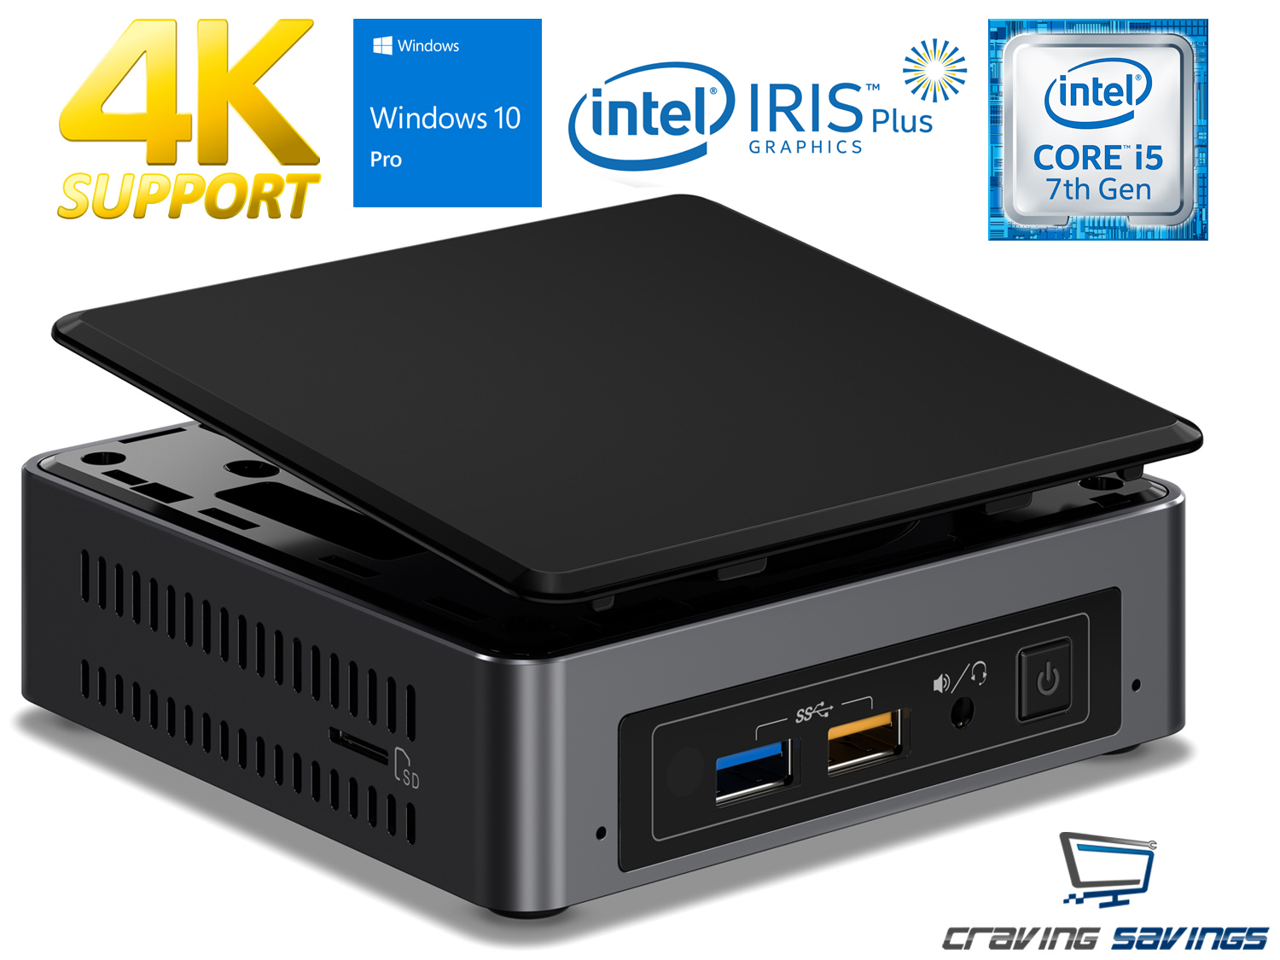 Intel NUC7i5BNK Mini PC, Intel Core i5-7260U 2.2GHz, 16GB DDR4, 1TB SSD, Wifi, BT 4.2, HDMI, Thunderbolt 3, 4k Support, Dual Monitor Capable, Windows 10 Pro